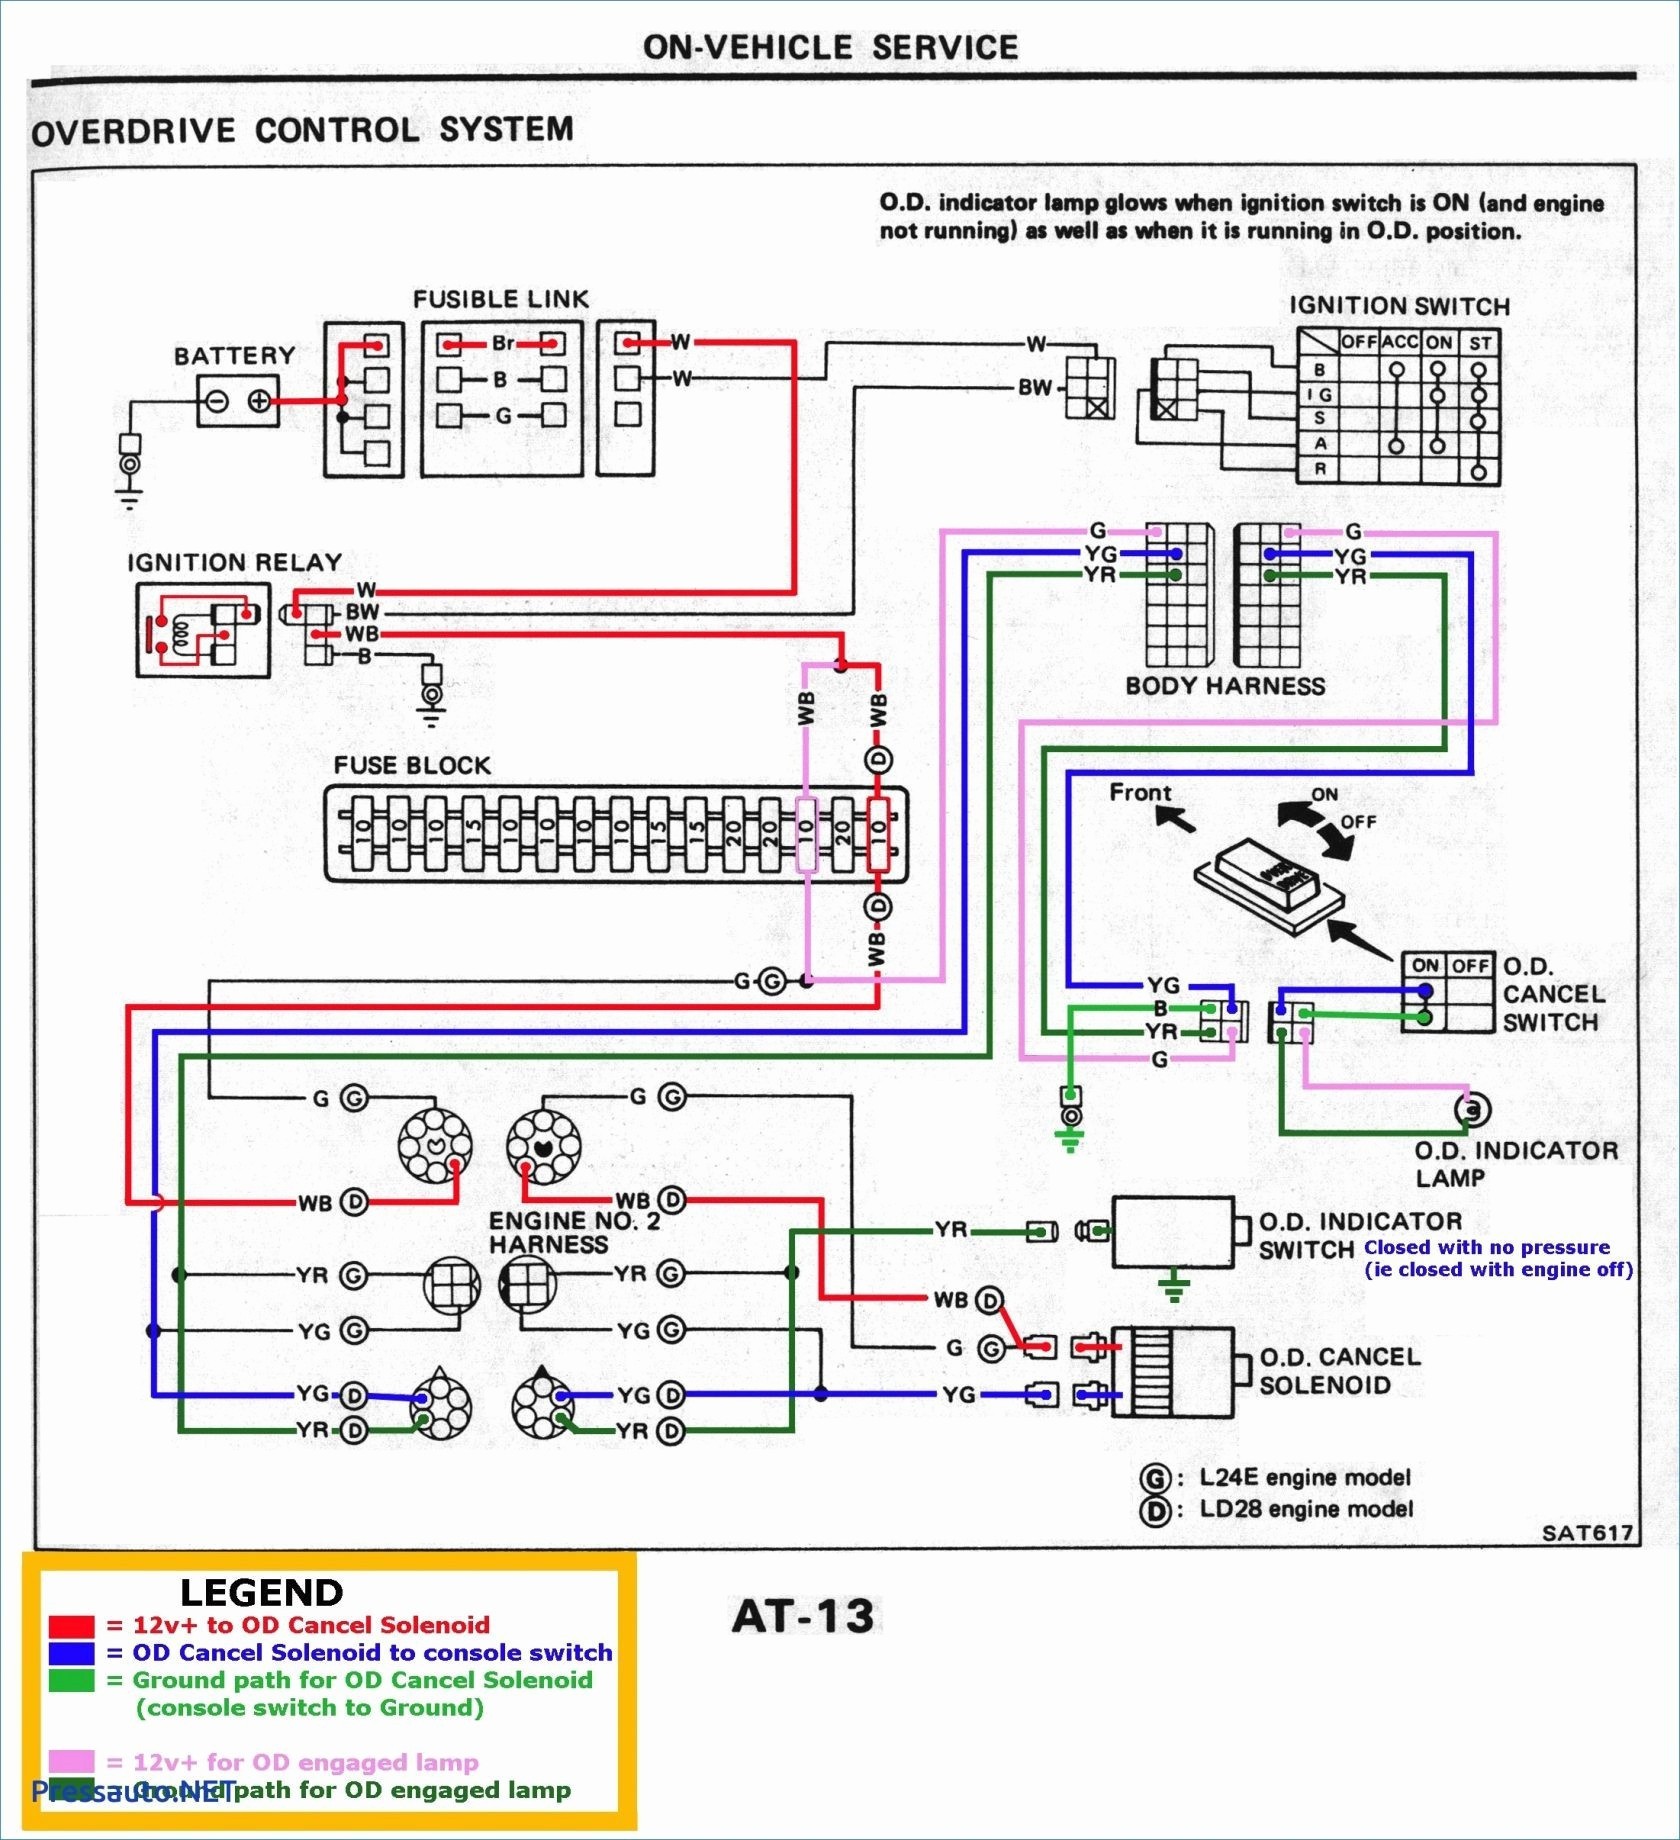 Warn Winch Remote Control Wiring Diagram New Wiring Diagram Winch solenoid Refrence Wiring Diagram for Warn